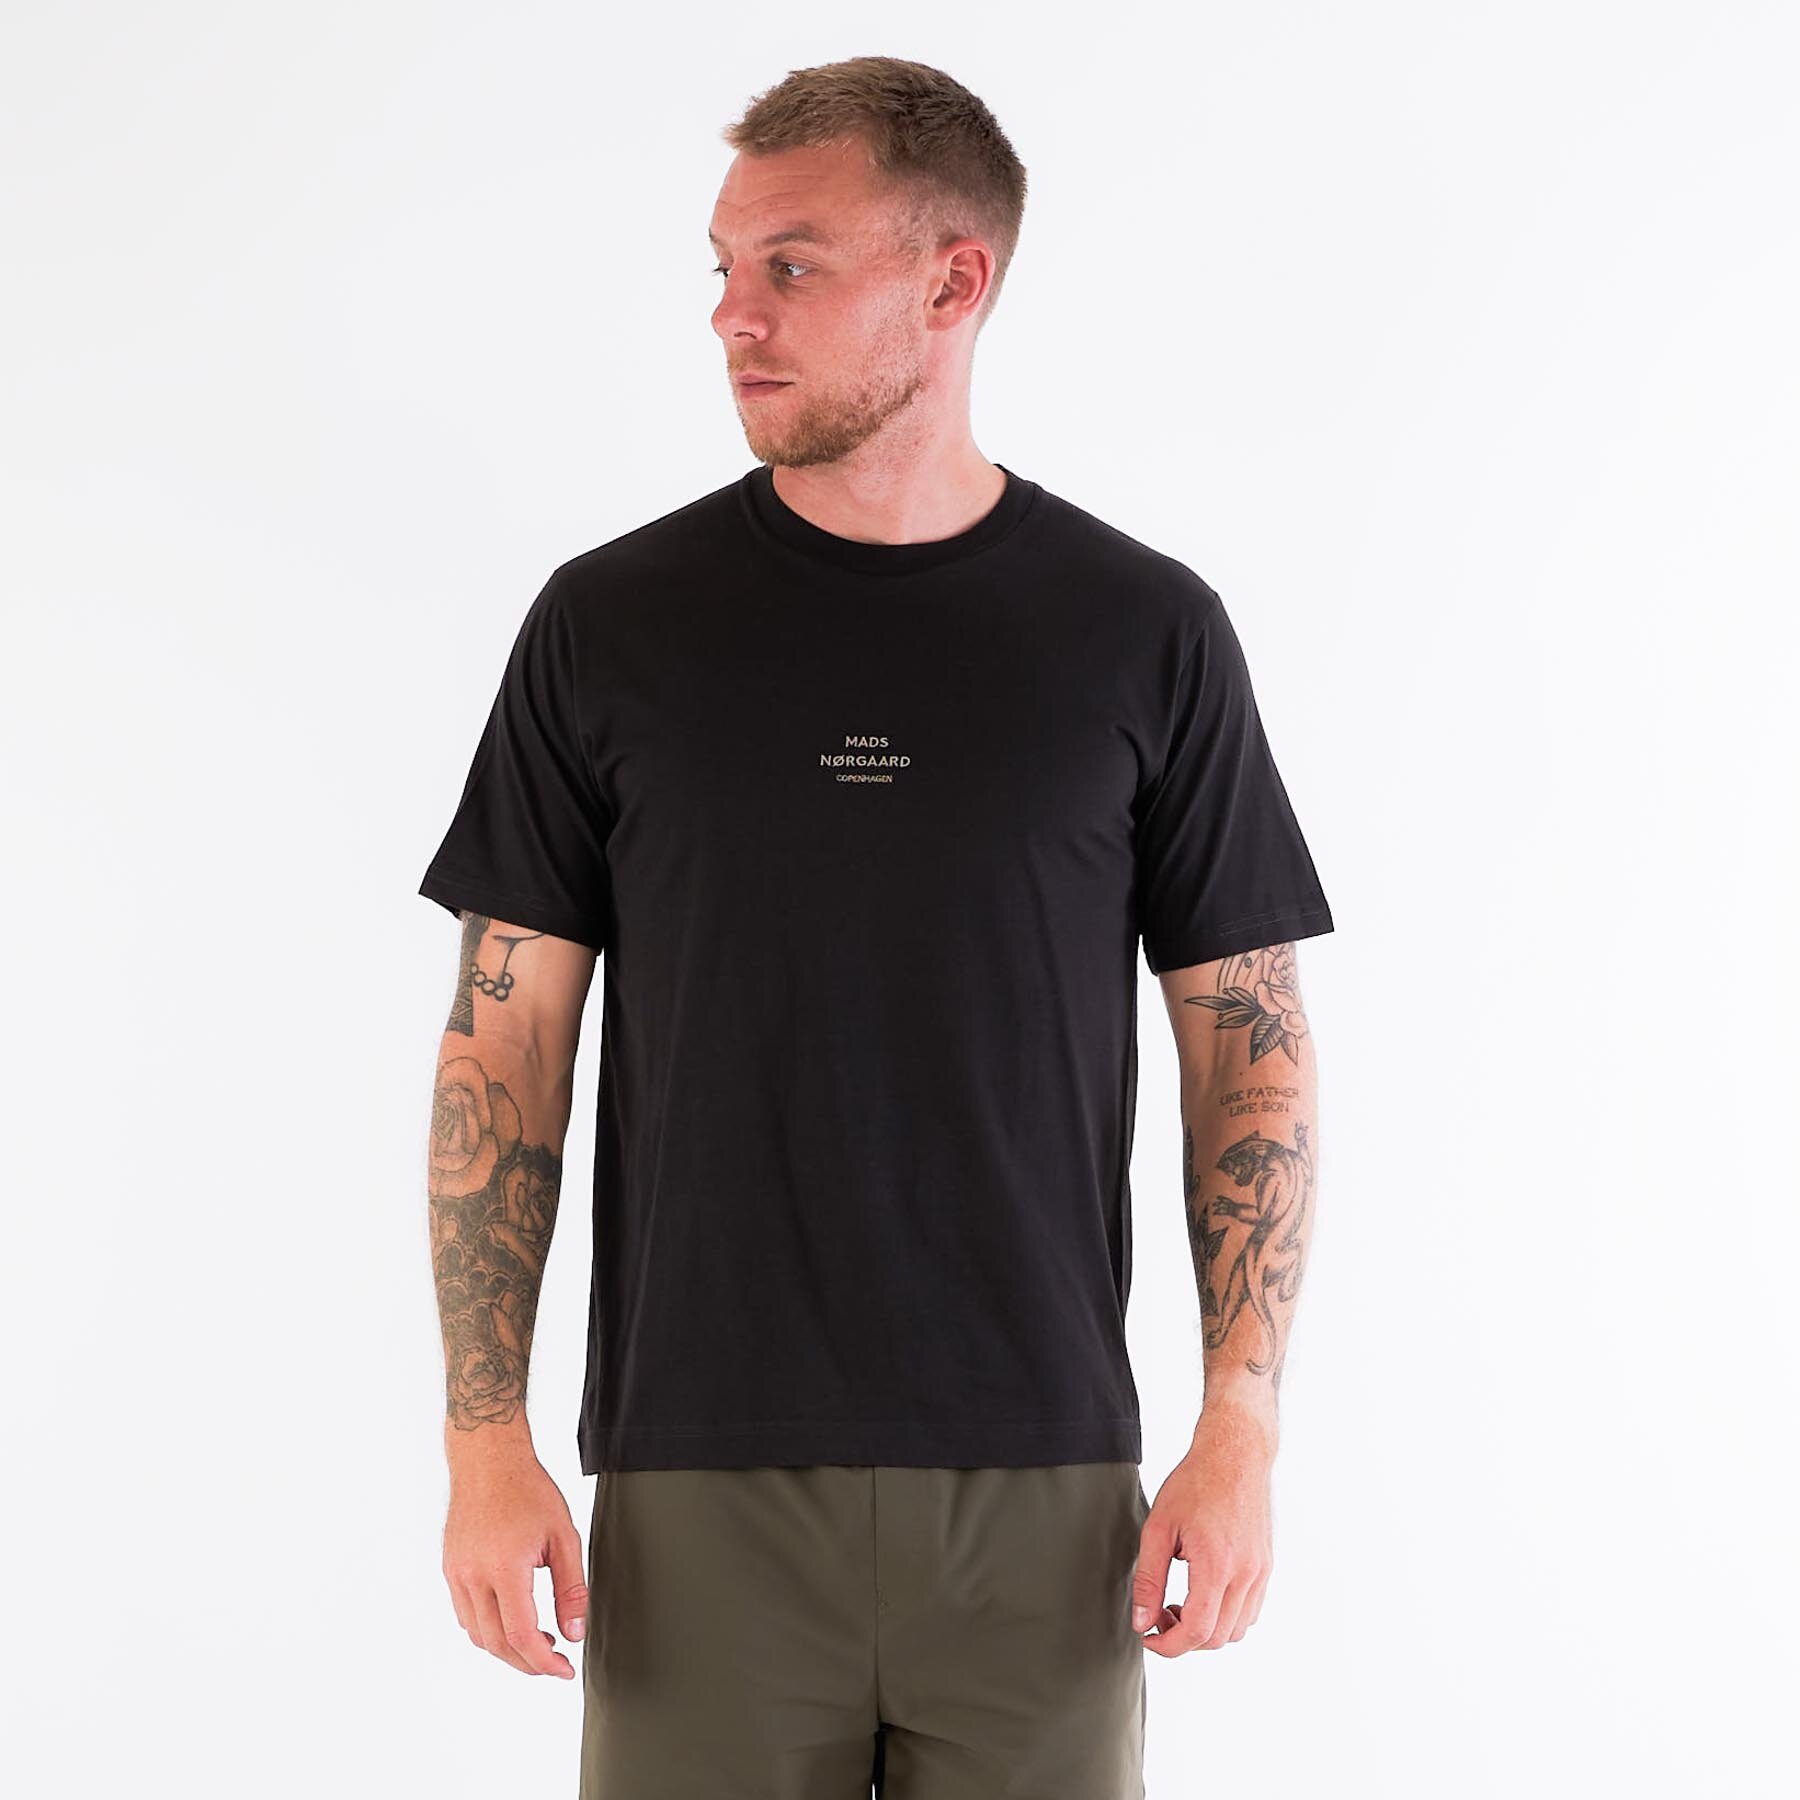 Nørgaard - Organic twin emb tee - T-shirts til mænd - Grå - XXL